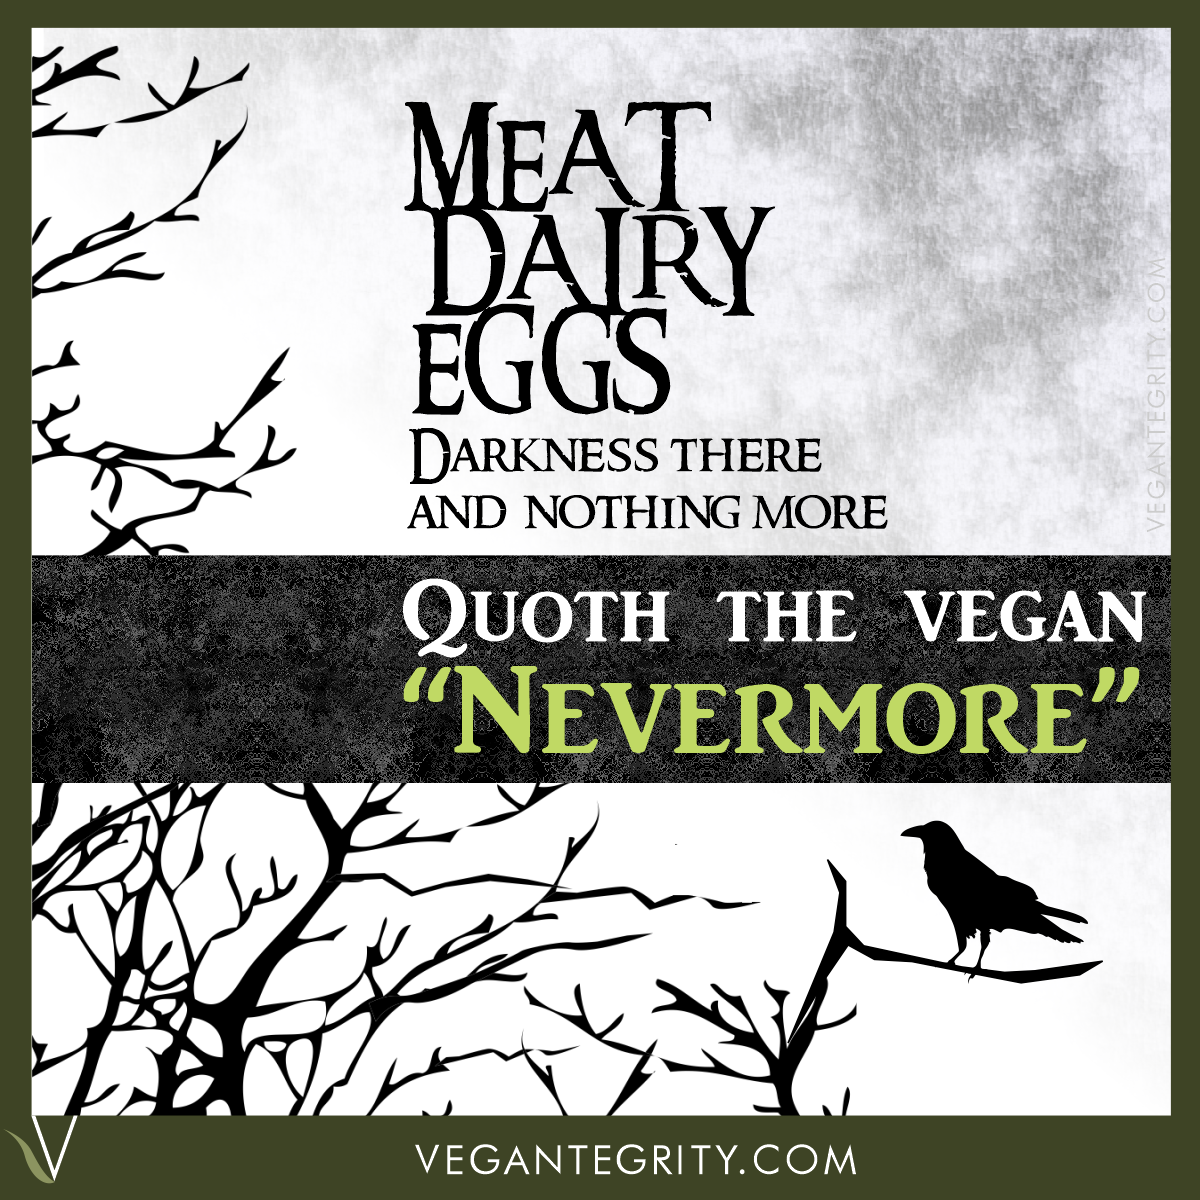 Quoth the vegan - nevermore.